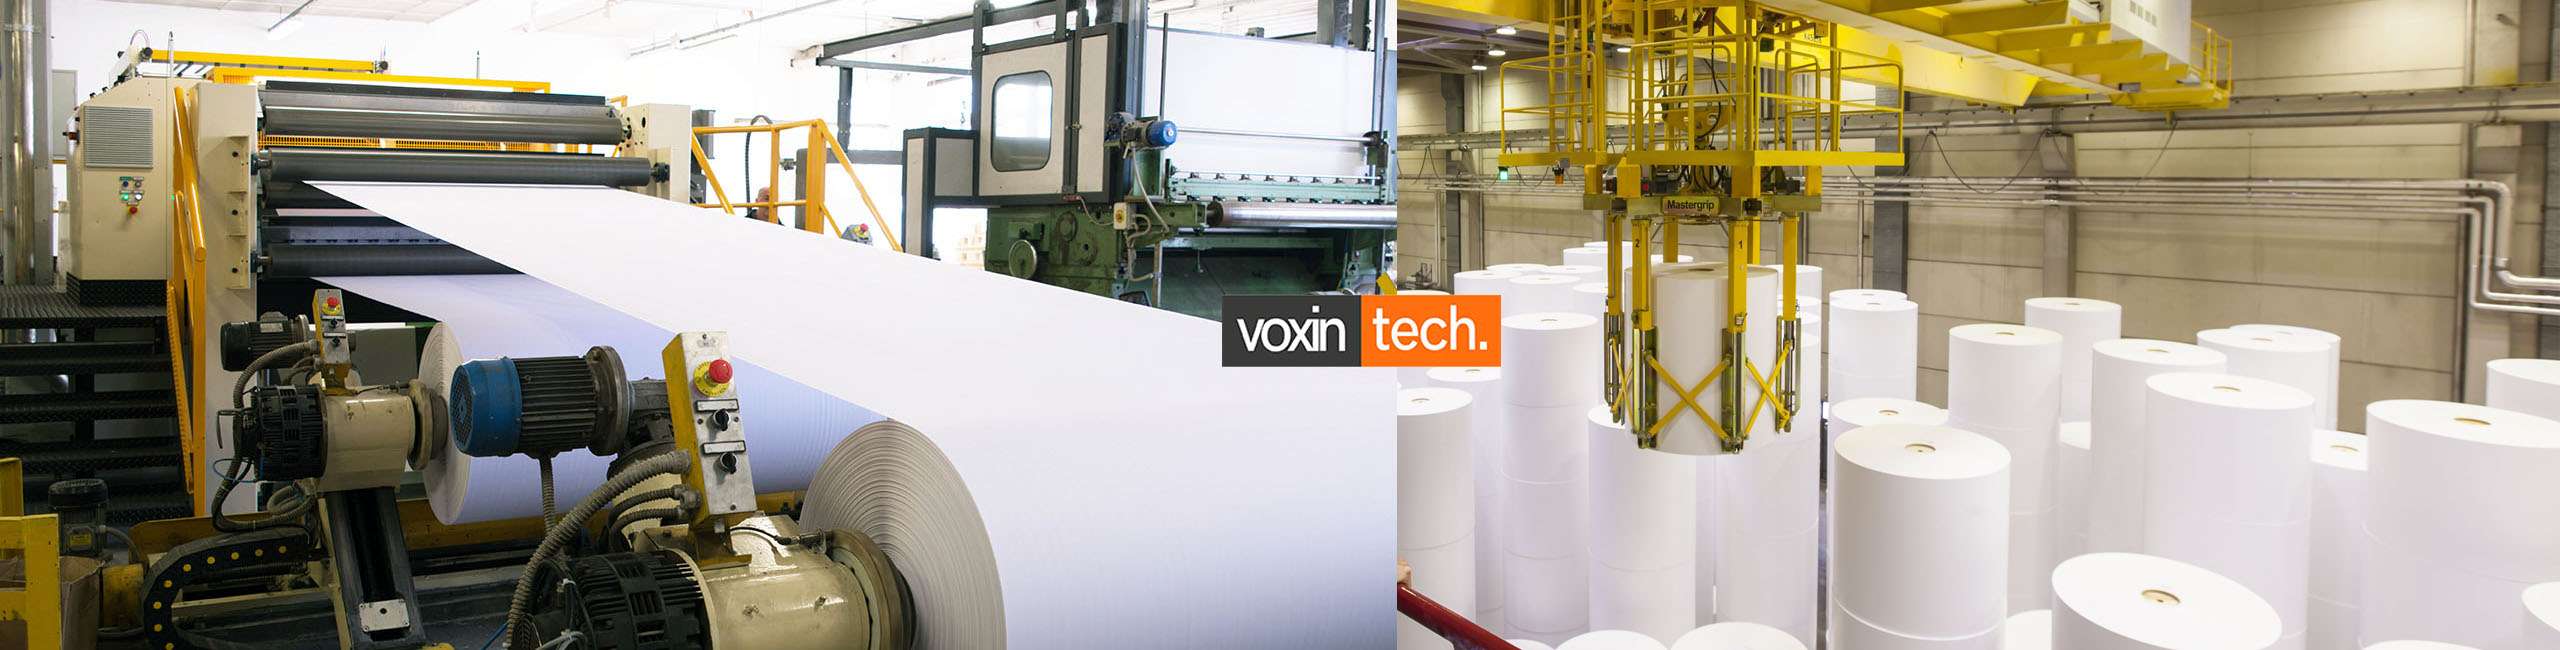 voxintech Sensor Manufacturer & Supplier , Vibration Monitoring Sensor for Pulp & Paper Industry, Vibration Monitoring Sensor for all Industrial Machine & Equipment